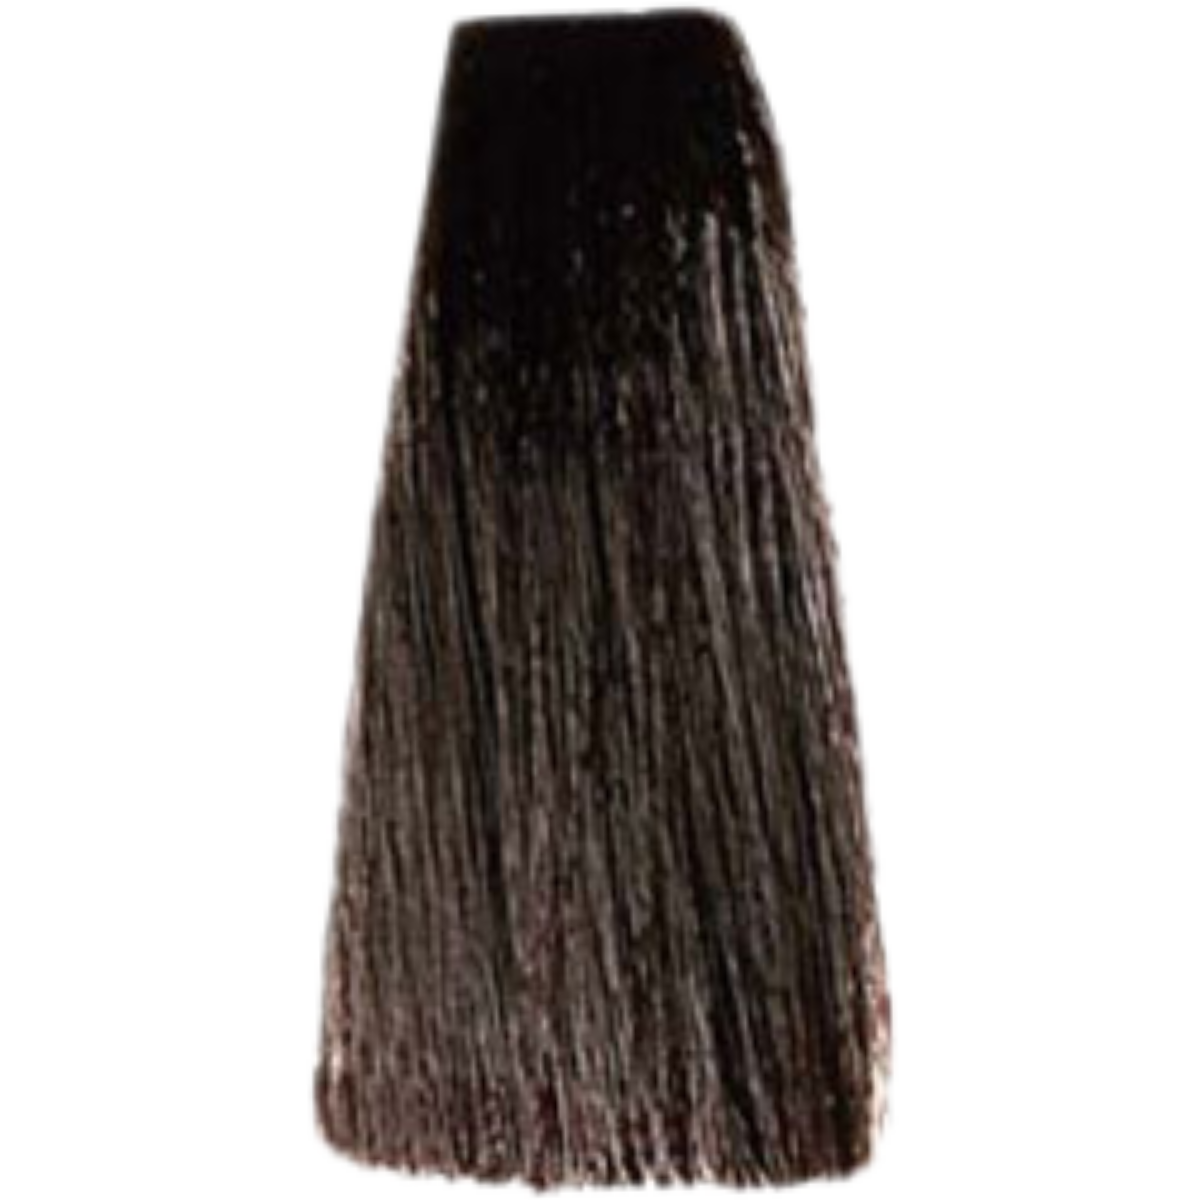 צבע שיער בסיס NATURALS BROWN 4.0 פארמויטה FarmaVita צבע לשיער 100 גרם